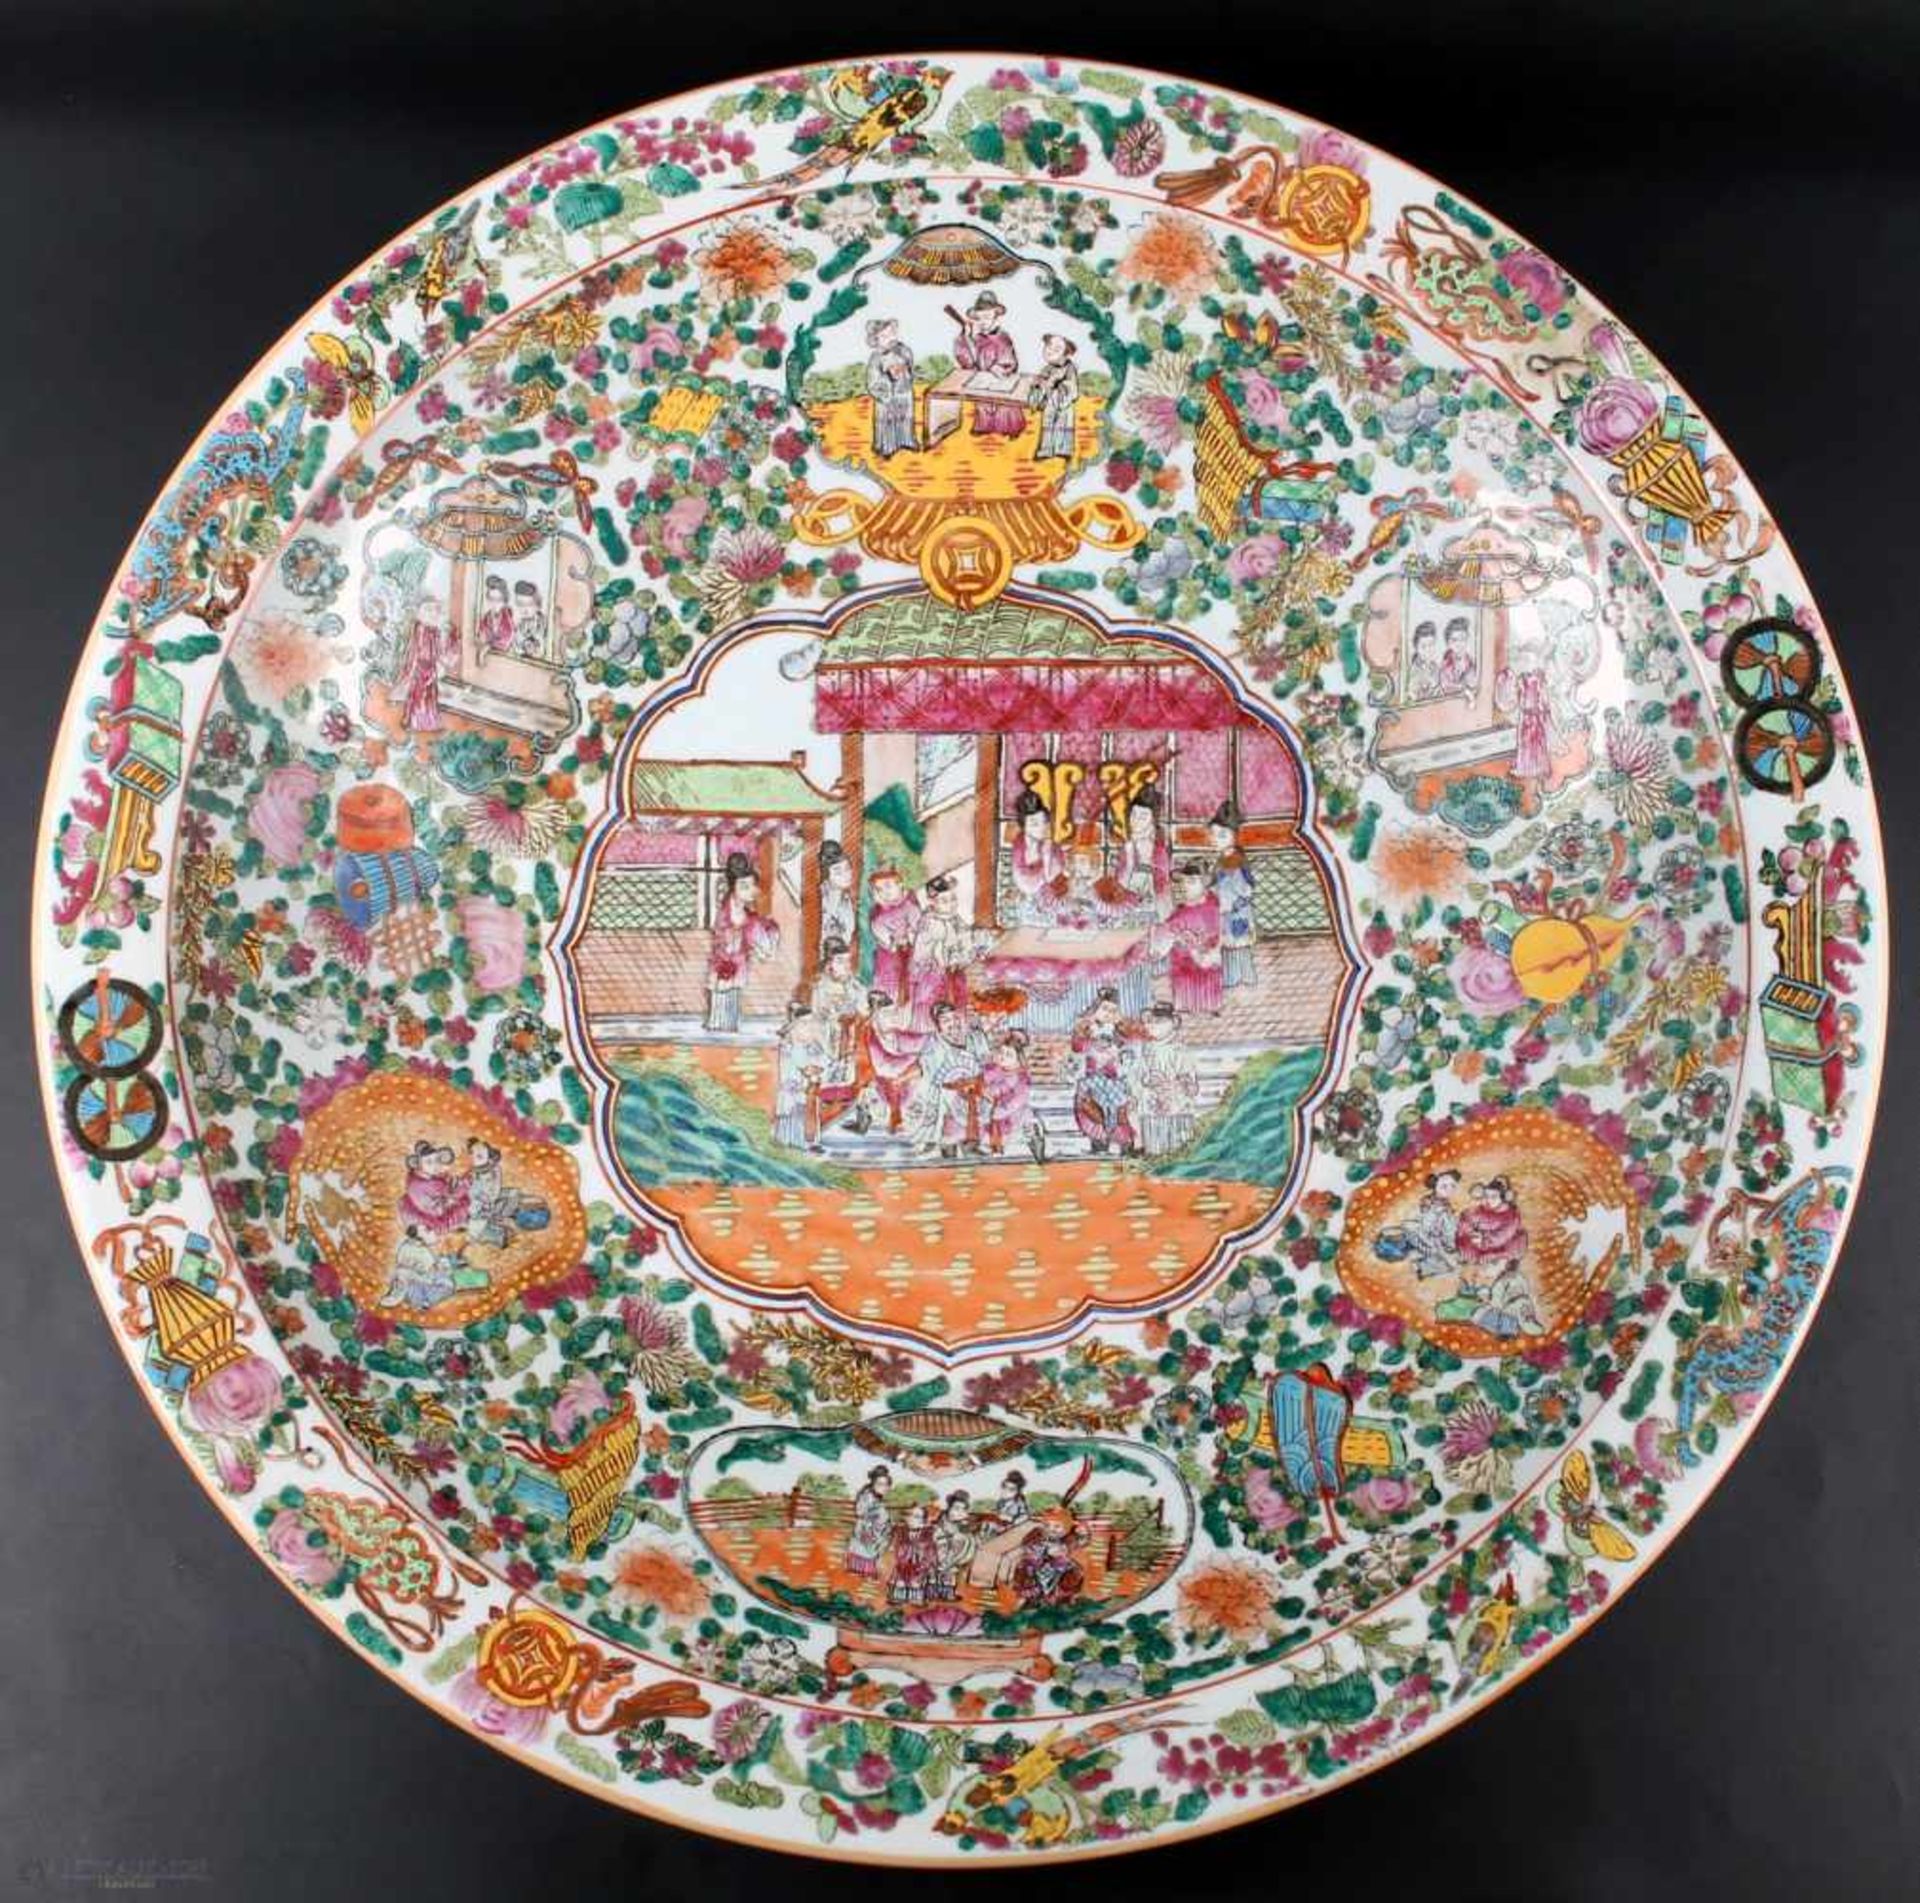 Riesige Schale D62cm, China, Porzellanschale polychrome Malerei, zentraler Medaillon mit großer